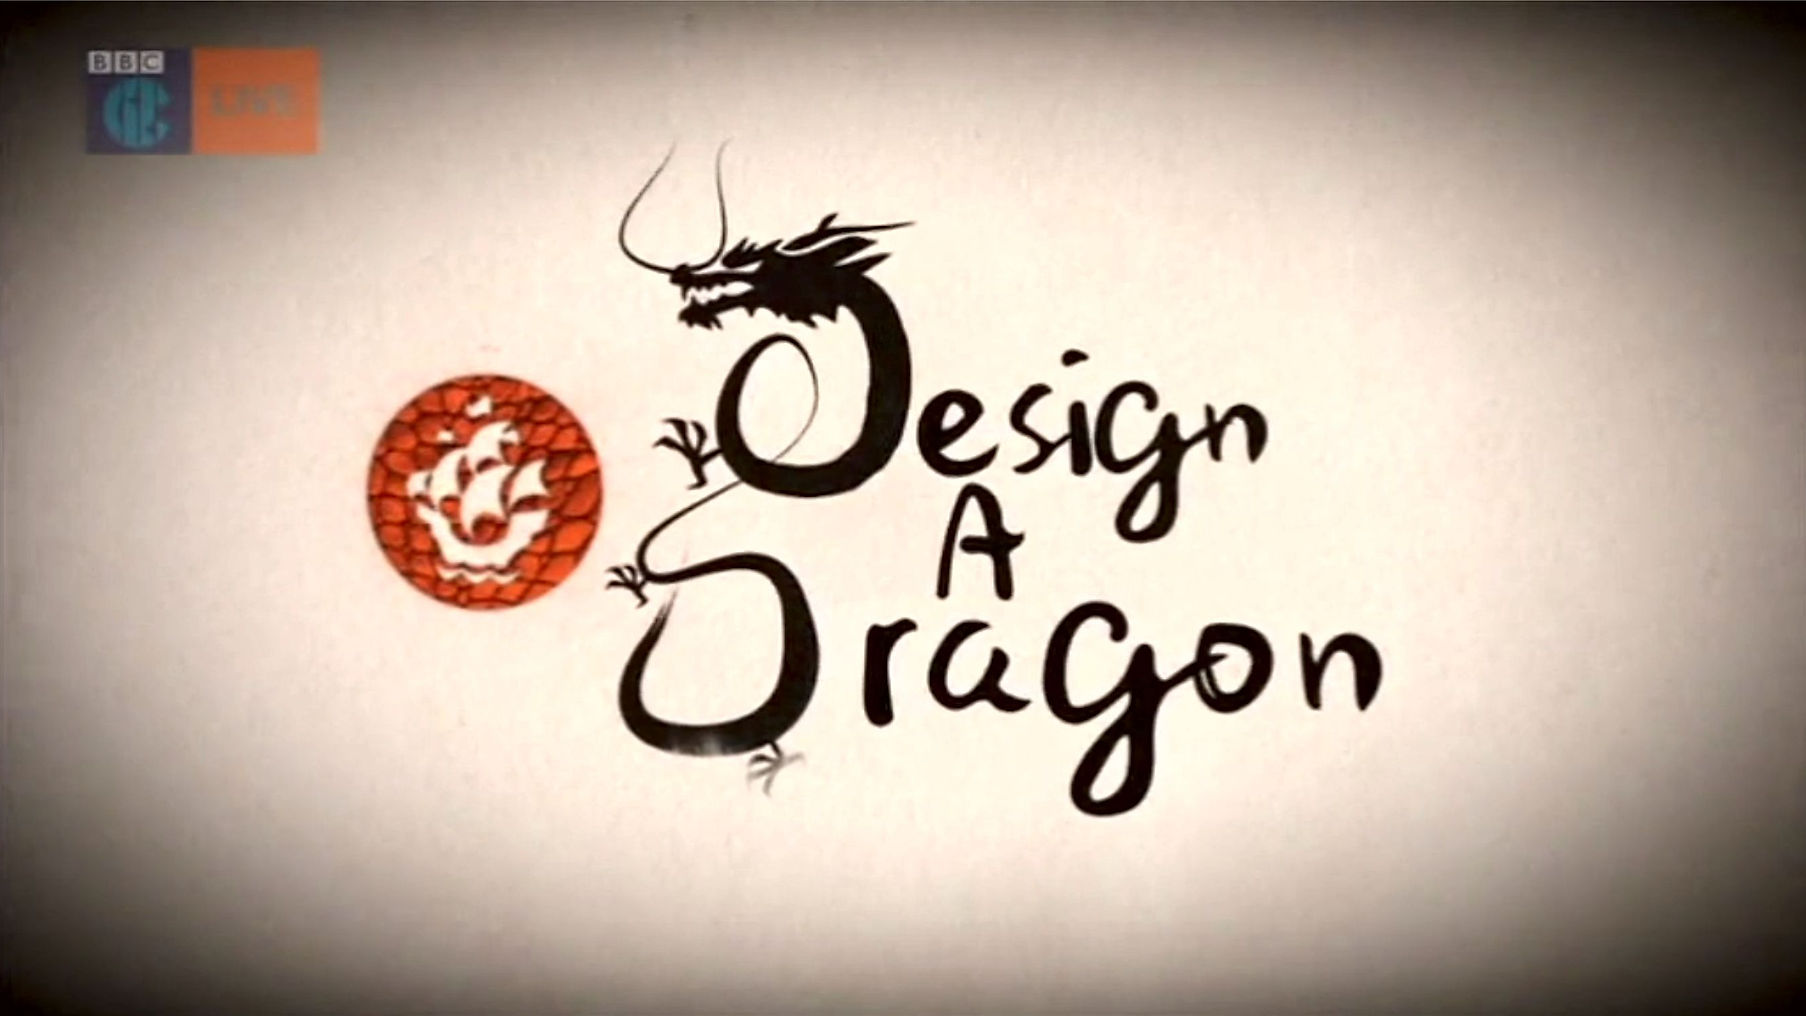 Blue Peter_Design A Dragon Competition